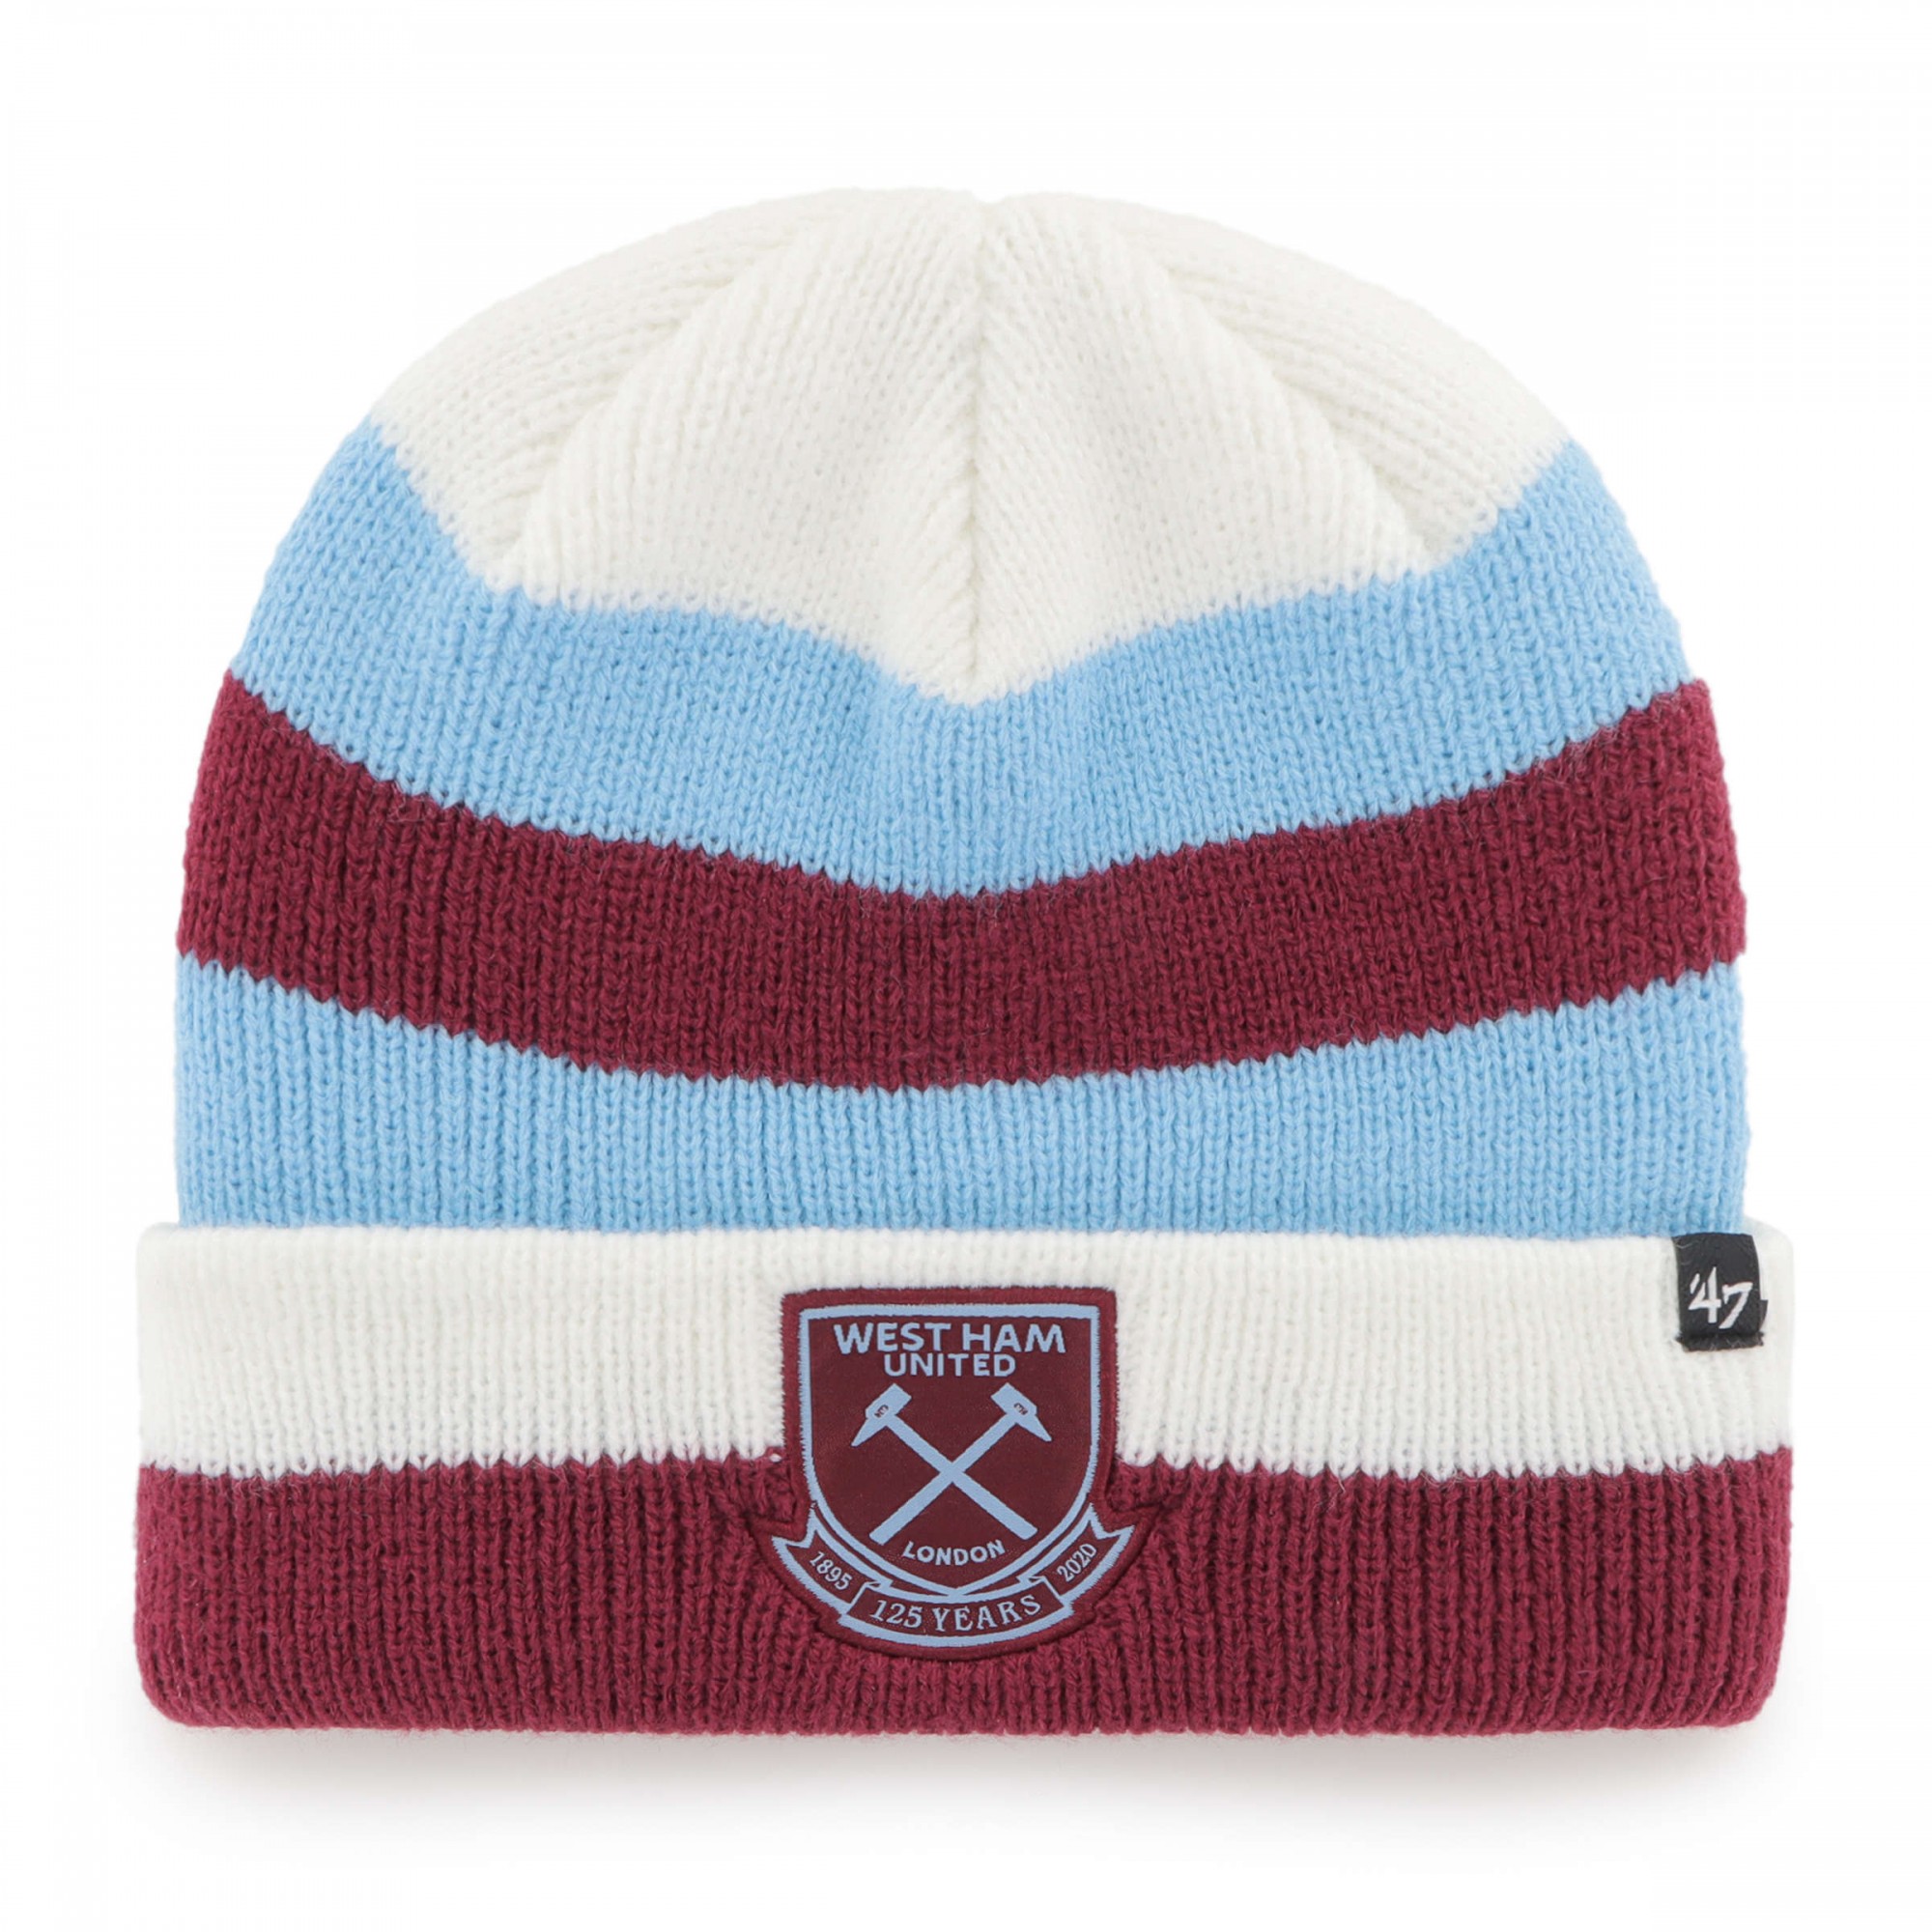 West Ham United Knitted Beanie Hat